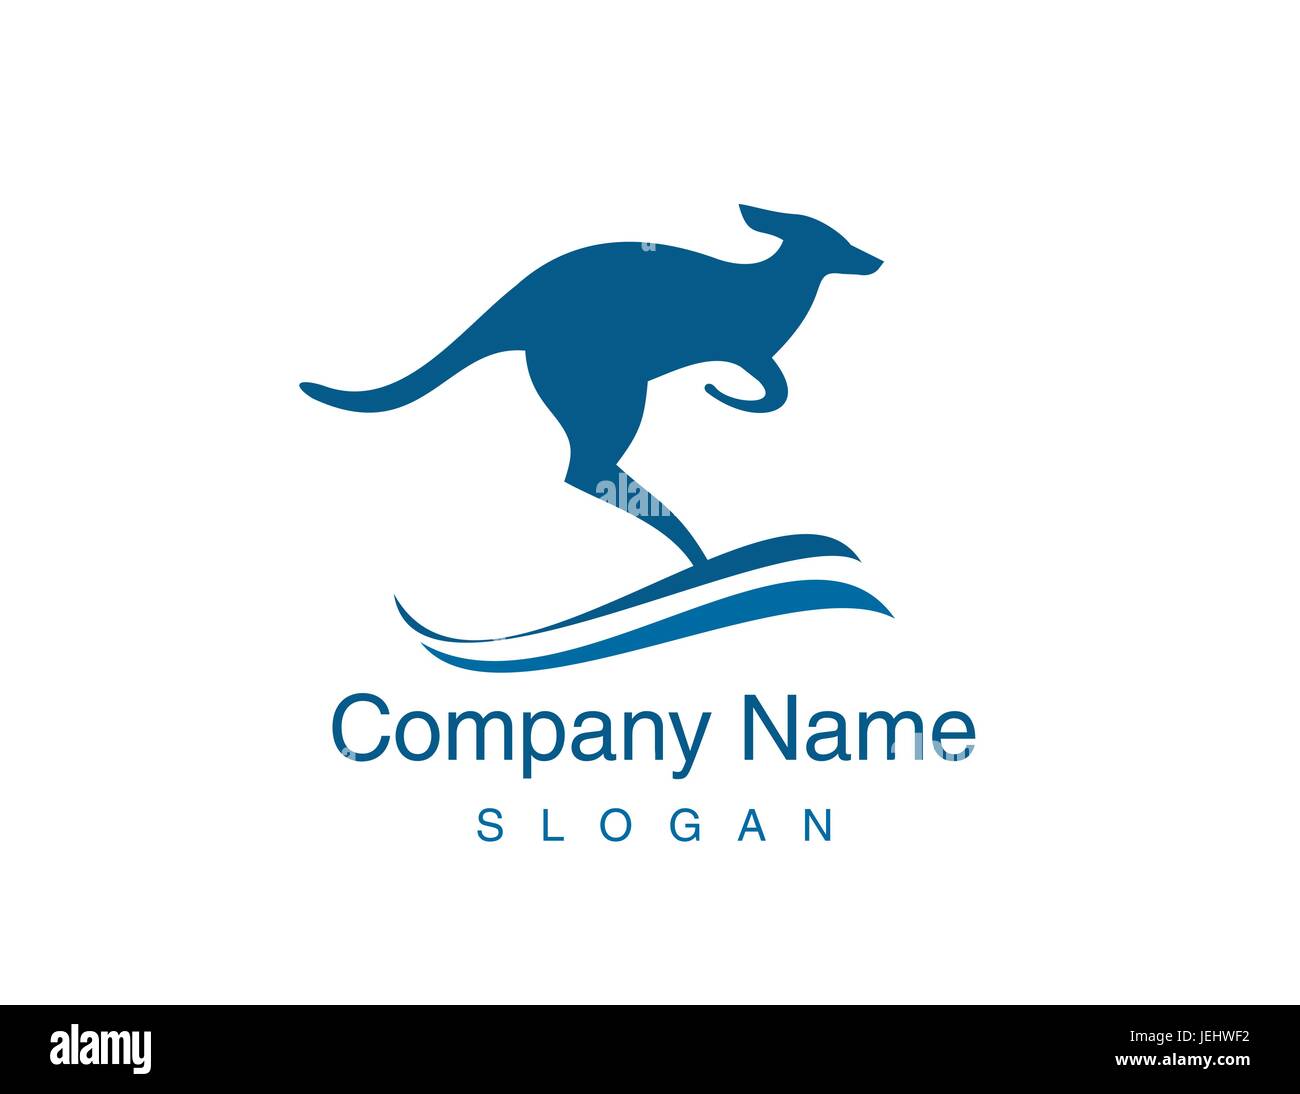 Kangaroo logo hi-res stock photography and images - Alamy